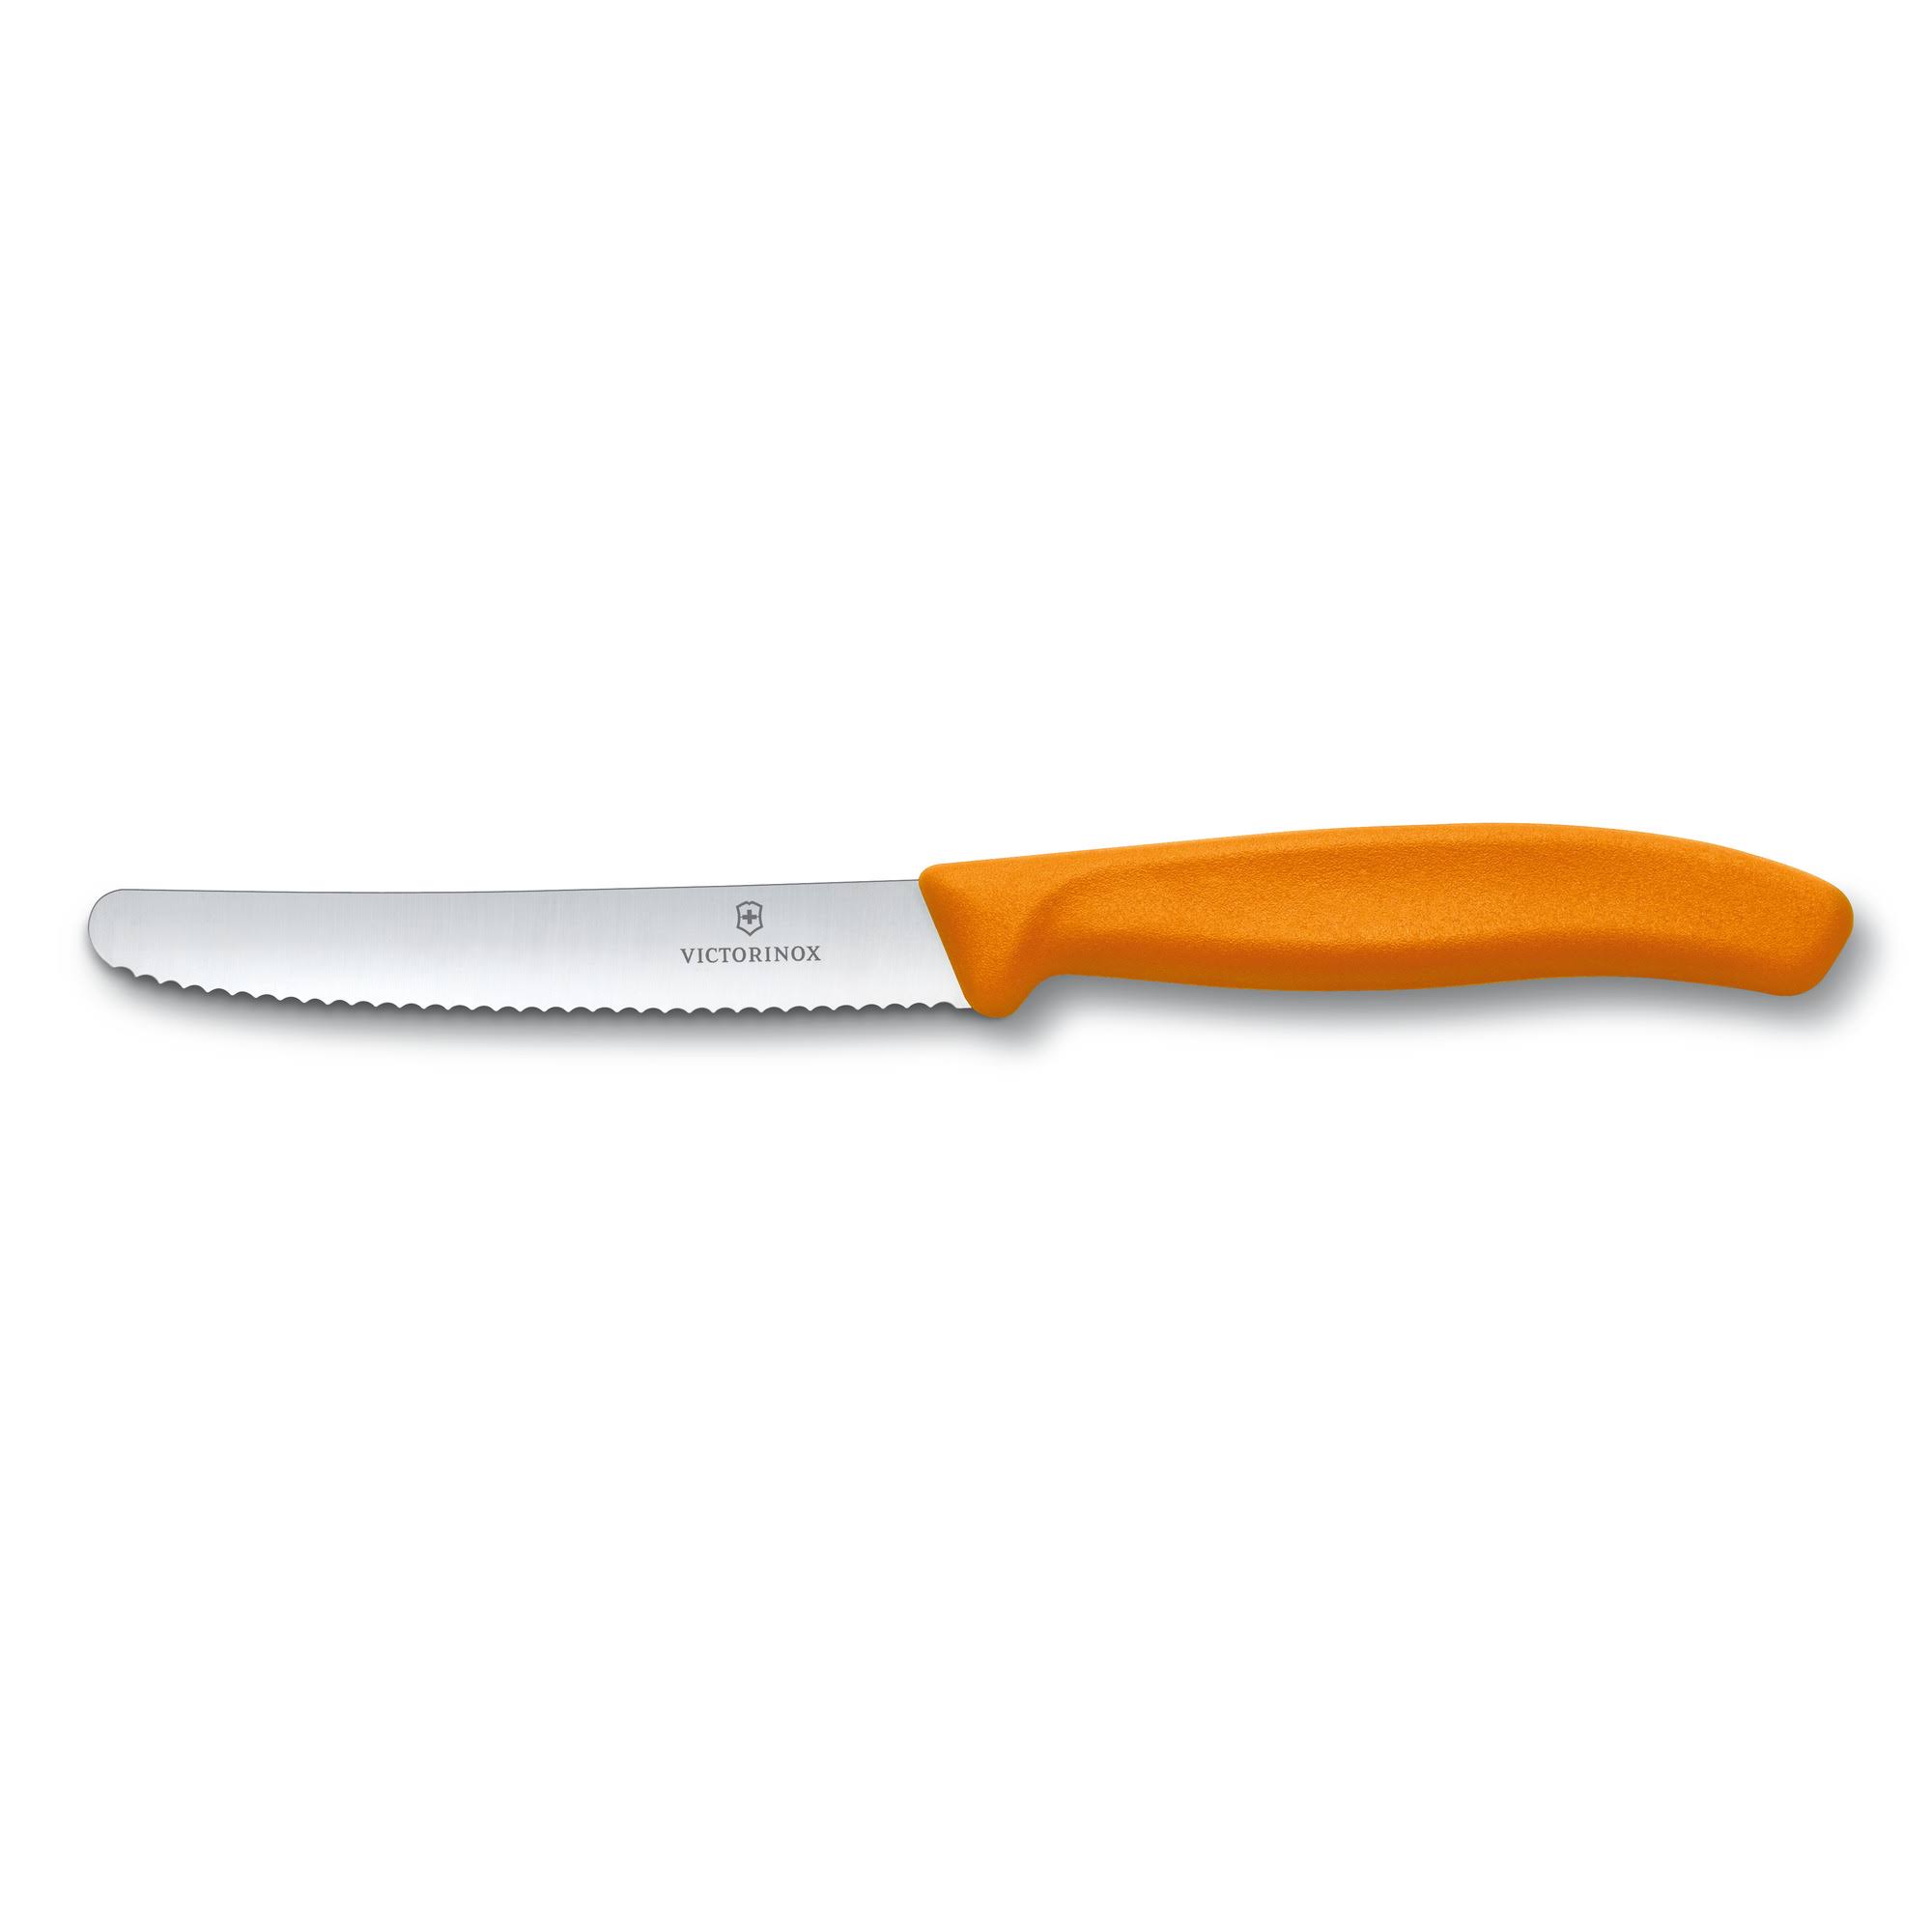 Victorinox Utility Serrated Knife - 4.5" Blade